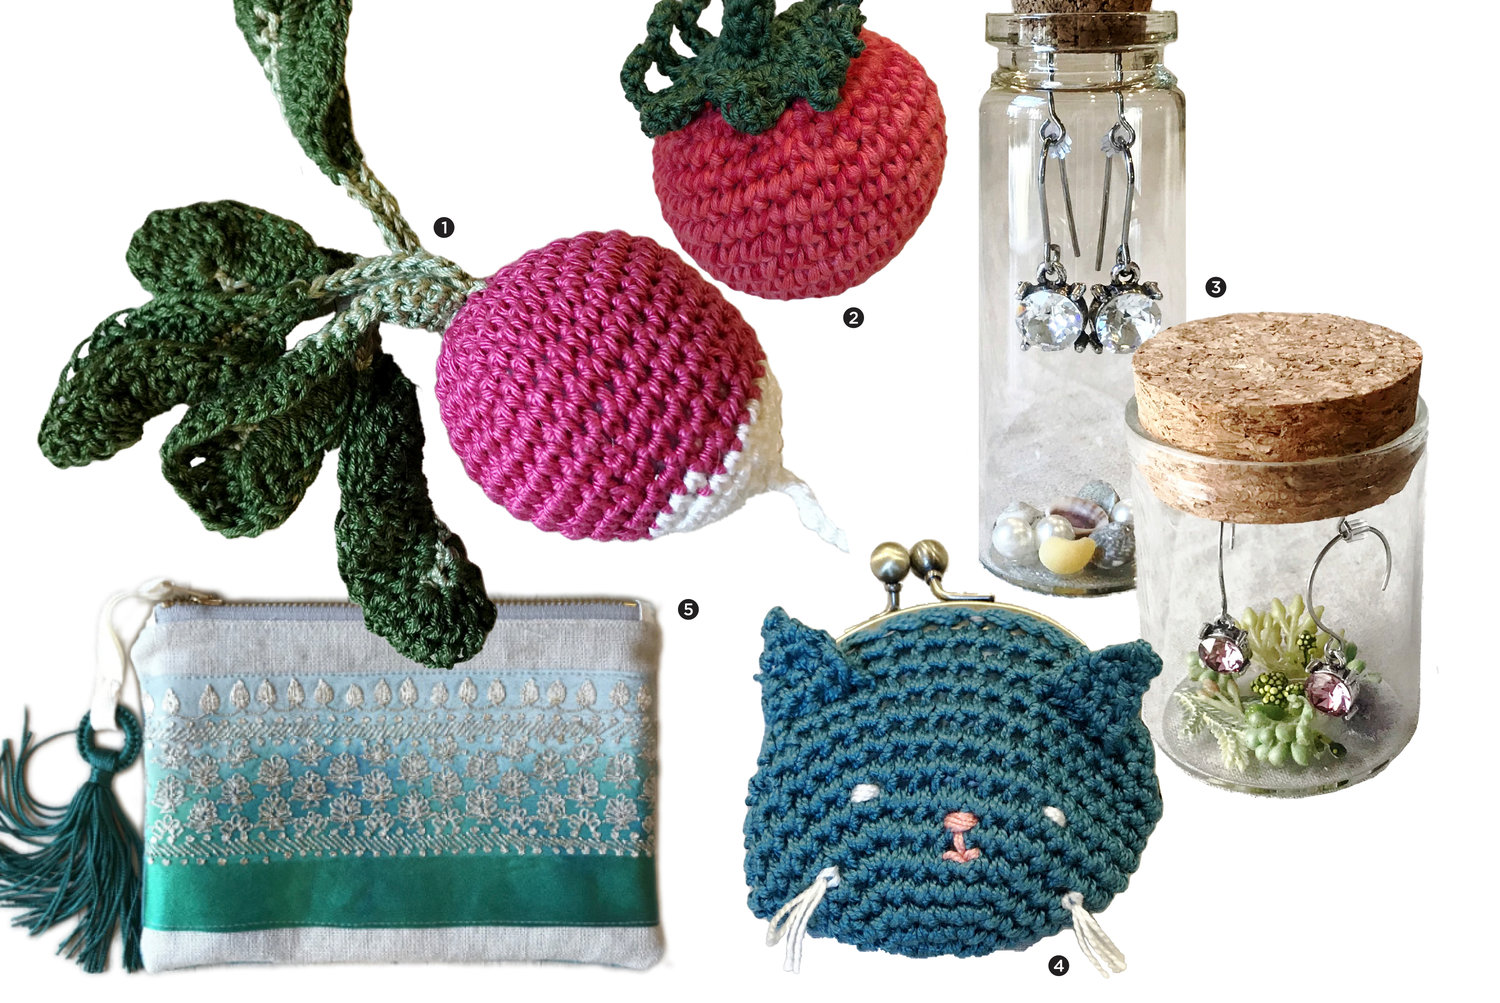 1. Cotton Crochet Radish; 2. Cotton Crochet Tomato; 3. Crystal Earrings; 4. Earbud Case/Coin Purse; 5. Zip Pouch.

FuzzyGoods.com